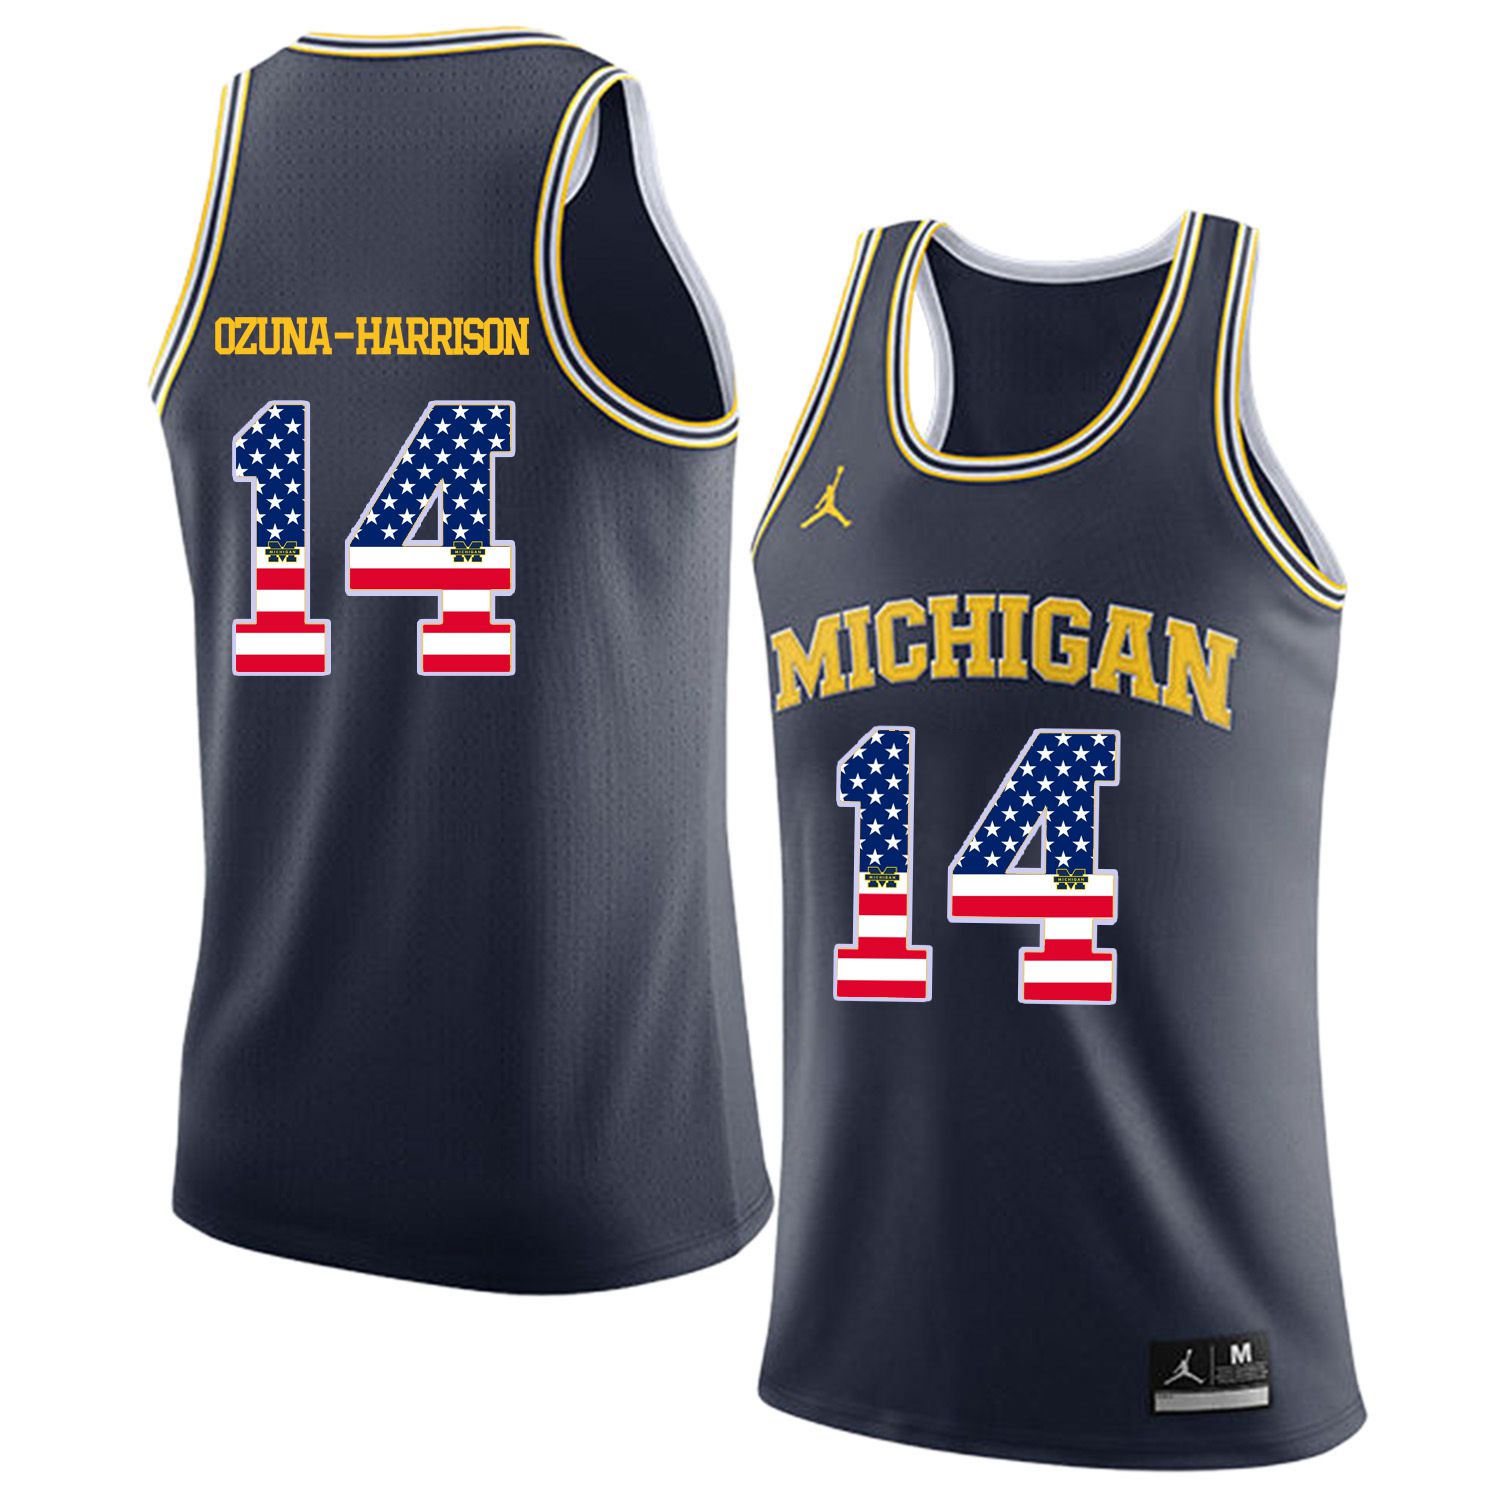 Men Jordan University of Michigan Basketball Navy 14 Ozuna-Harrison Flag Customized NCAA Jerseys